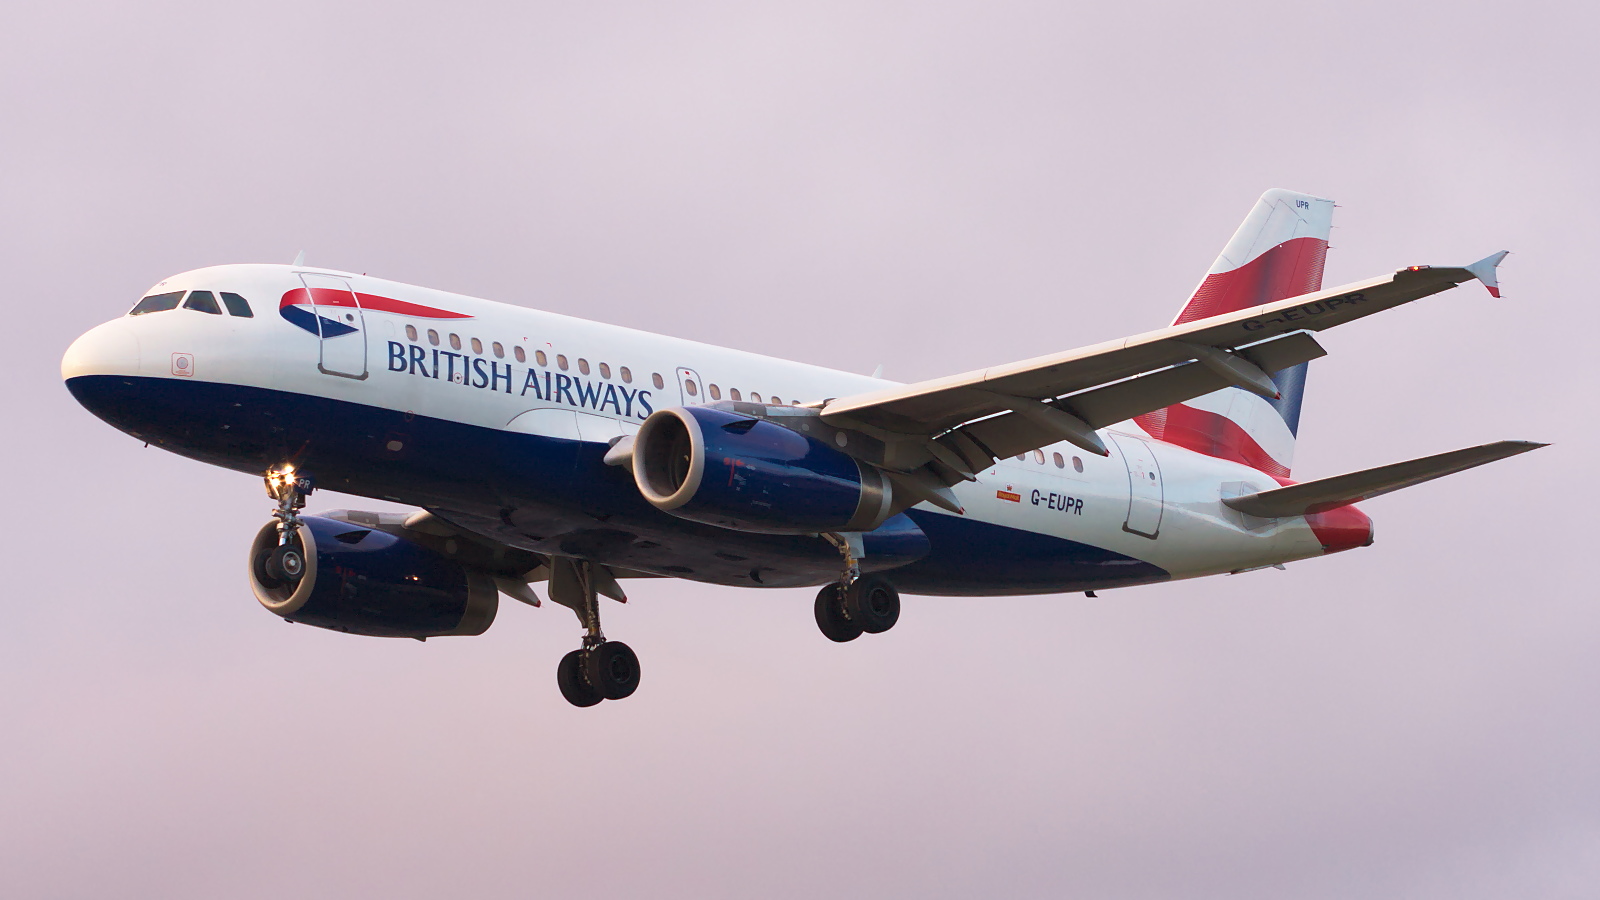 G-EUPR ✈ British Airways Airbus A319-131 @ London-Heathrow